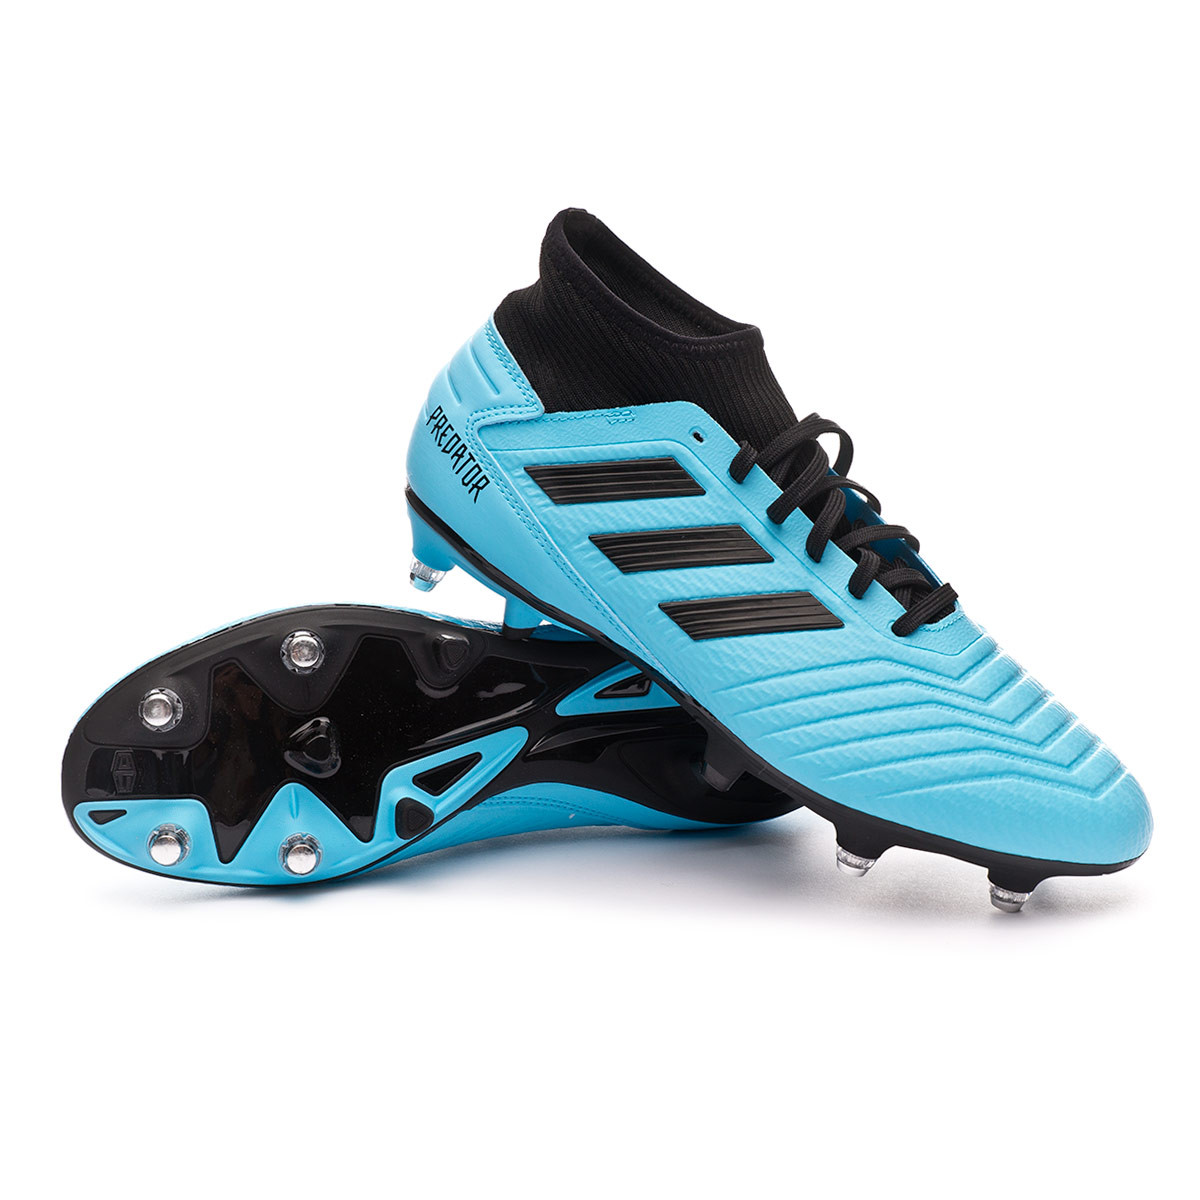 Football Boots adidas Predator 19.3 SG Bright cyan-Core black-Solar yellow  - Football store Fútbol Emotion